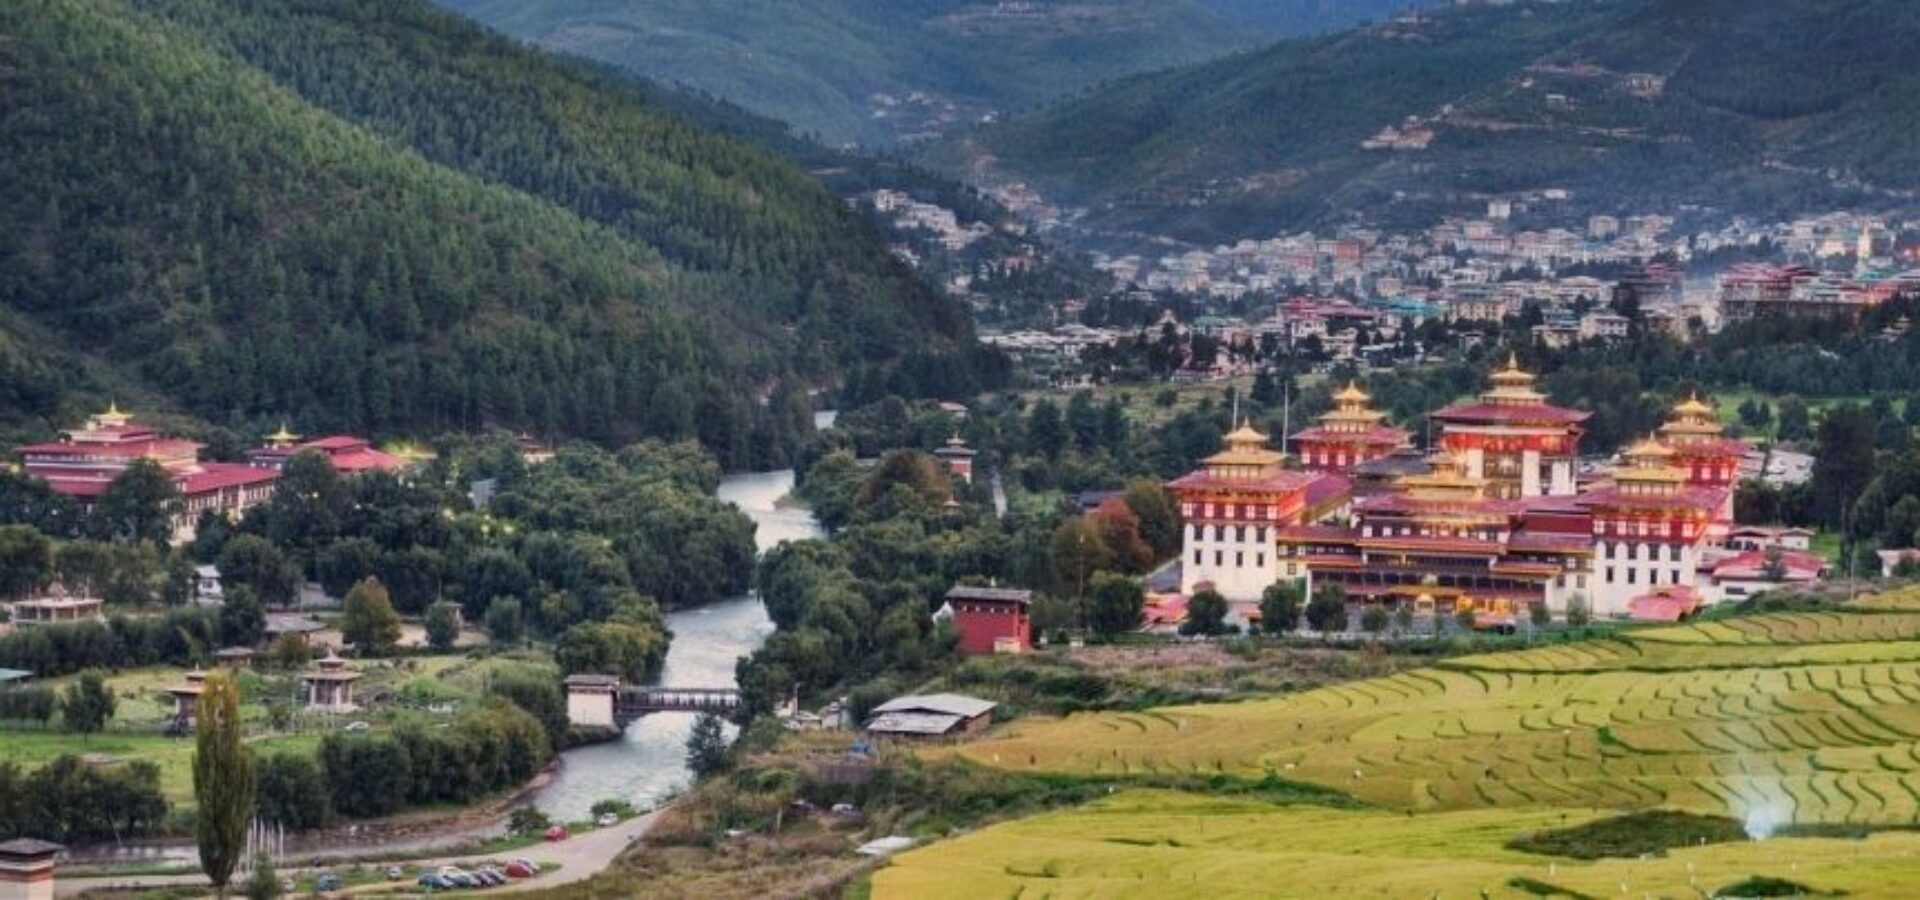 Atlas Bhutan Tour & Travel